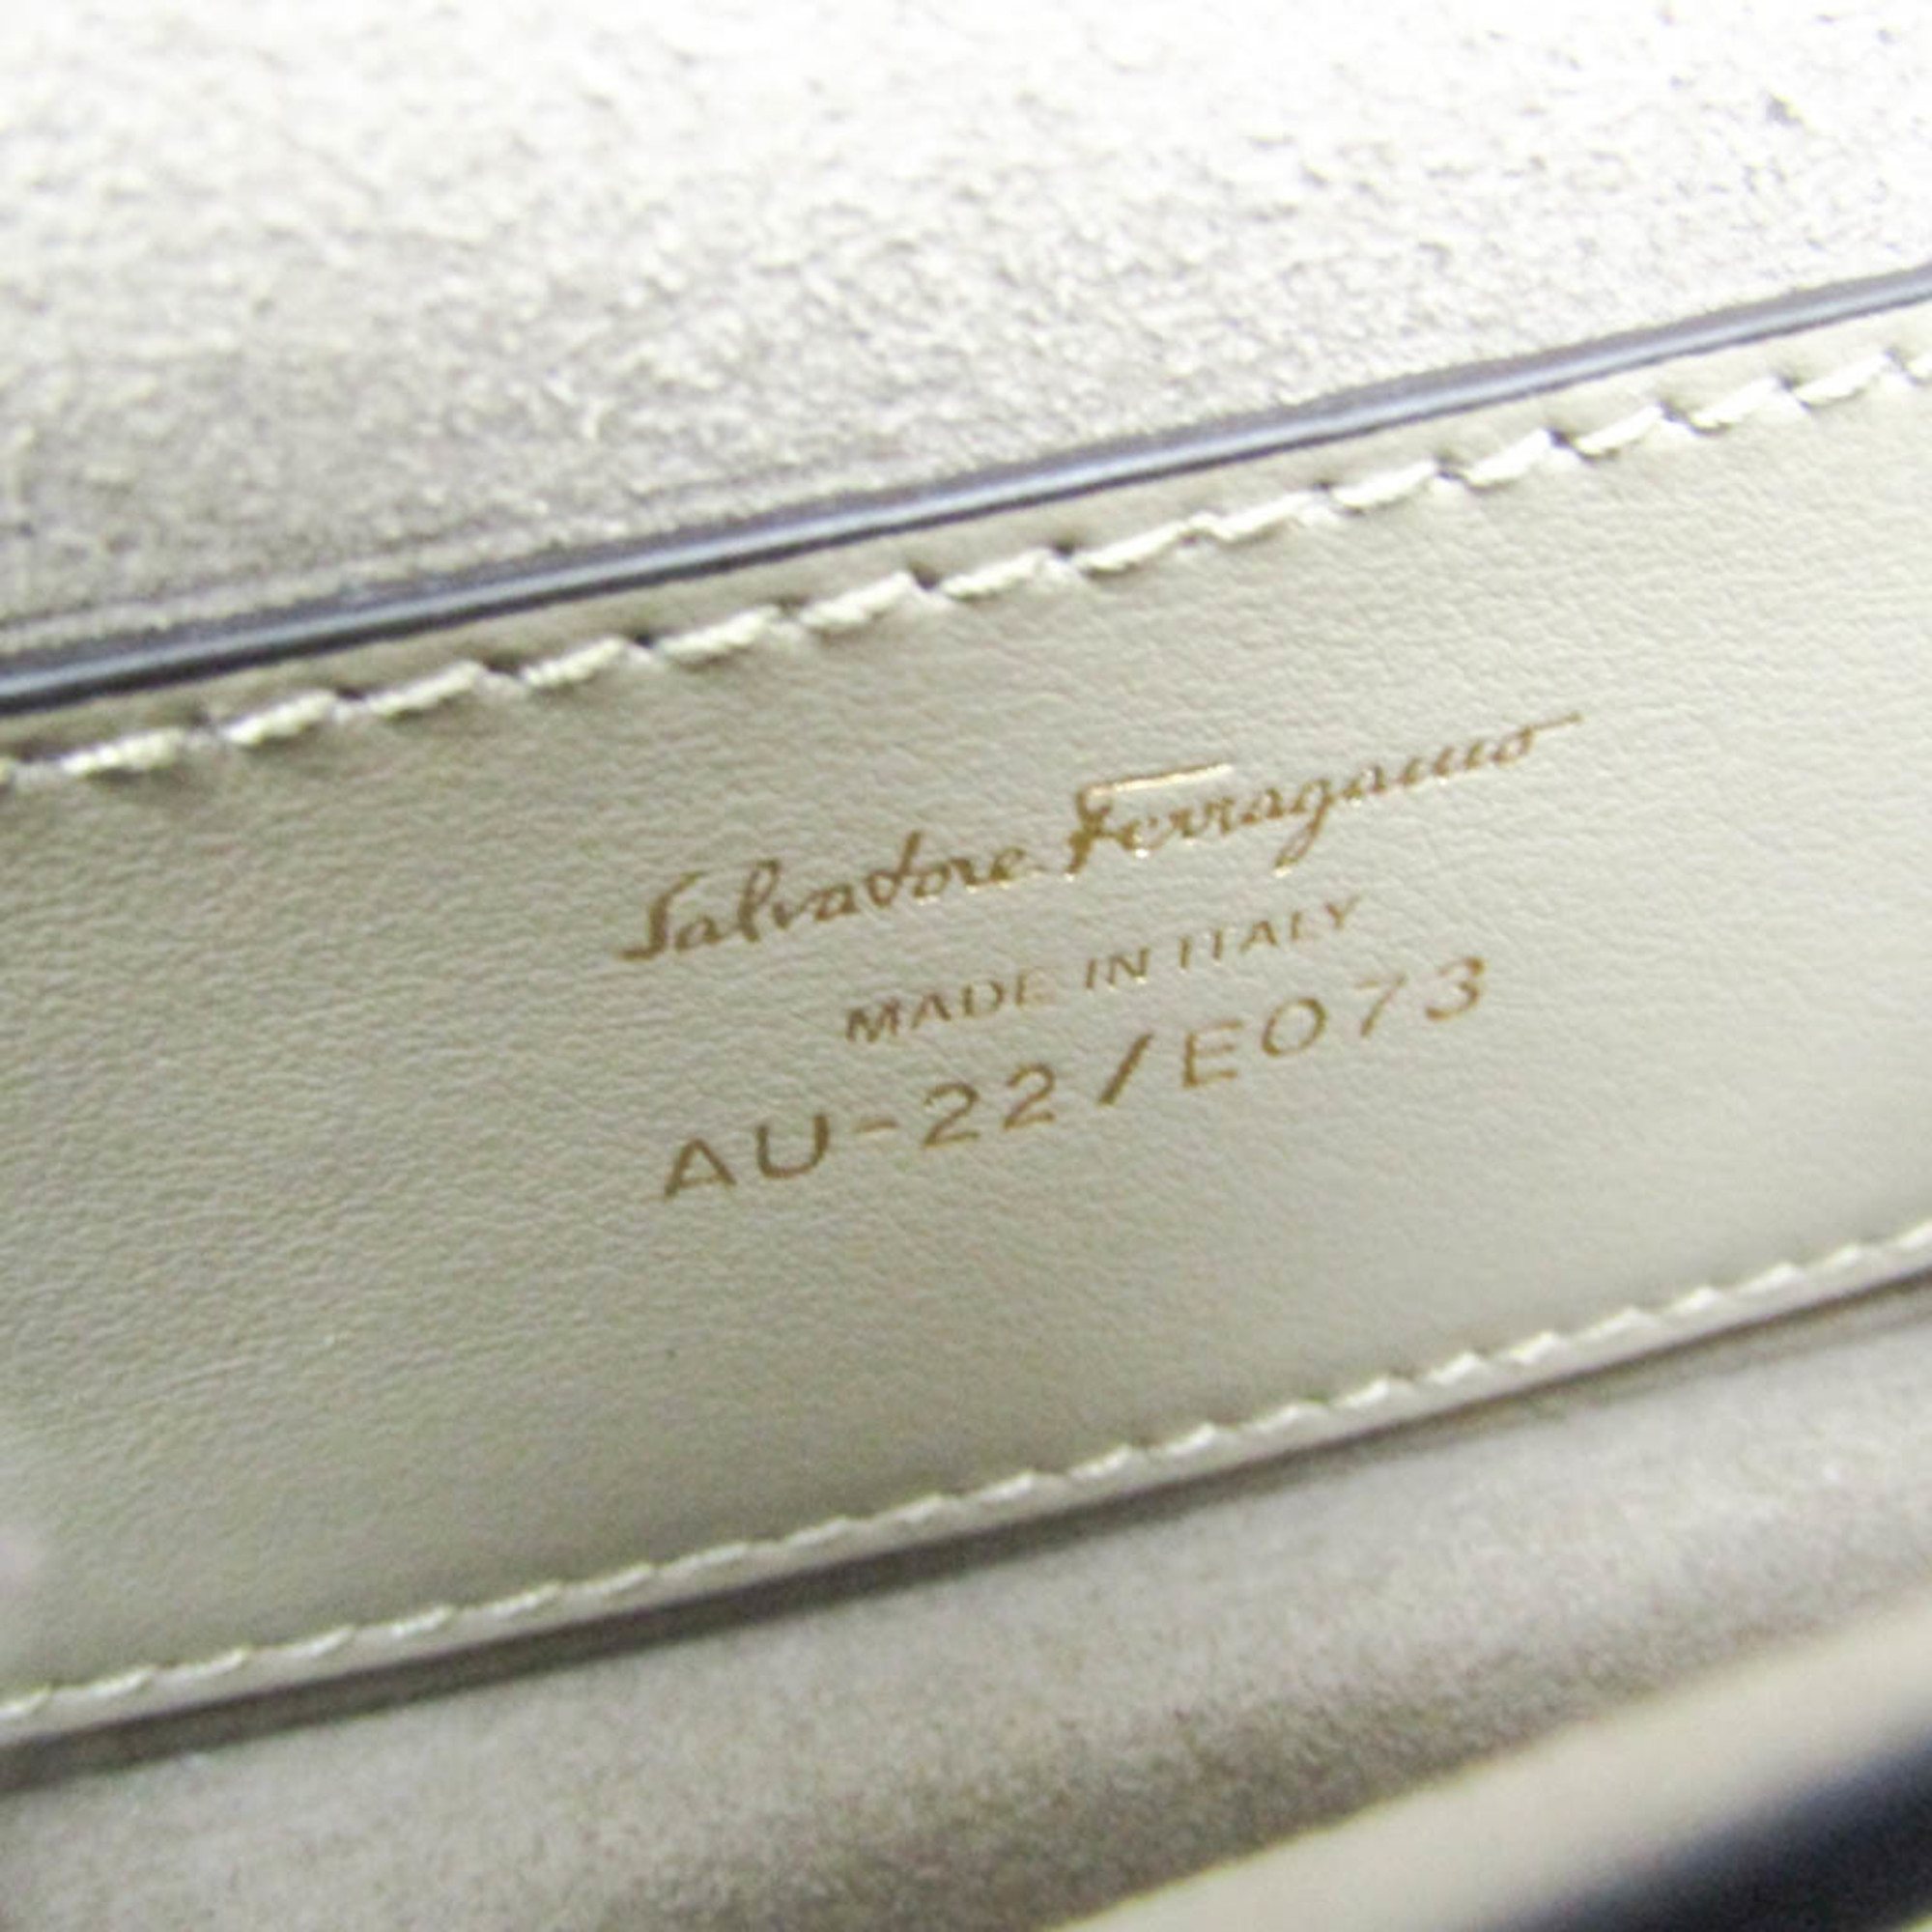 Salvatore Ferragamo Mini AU-22 E073 Women's Leather Shoulder Bag Gray Beige